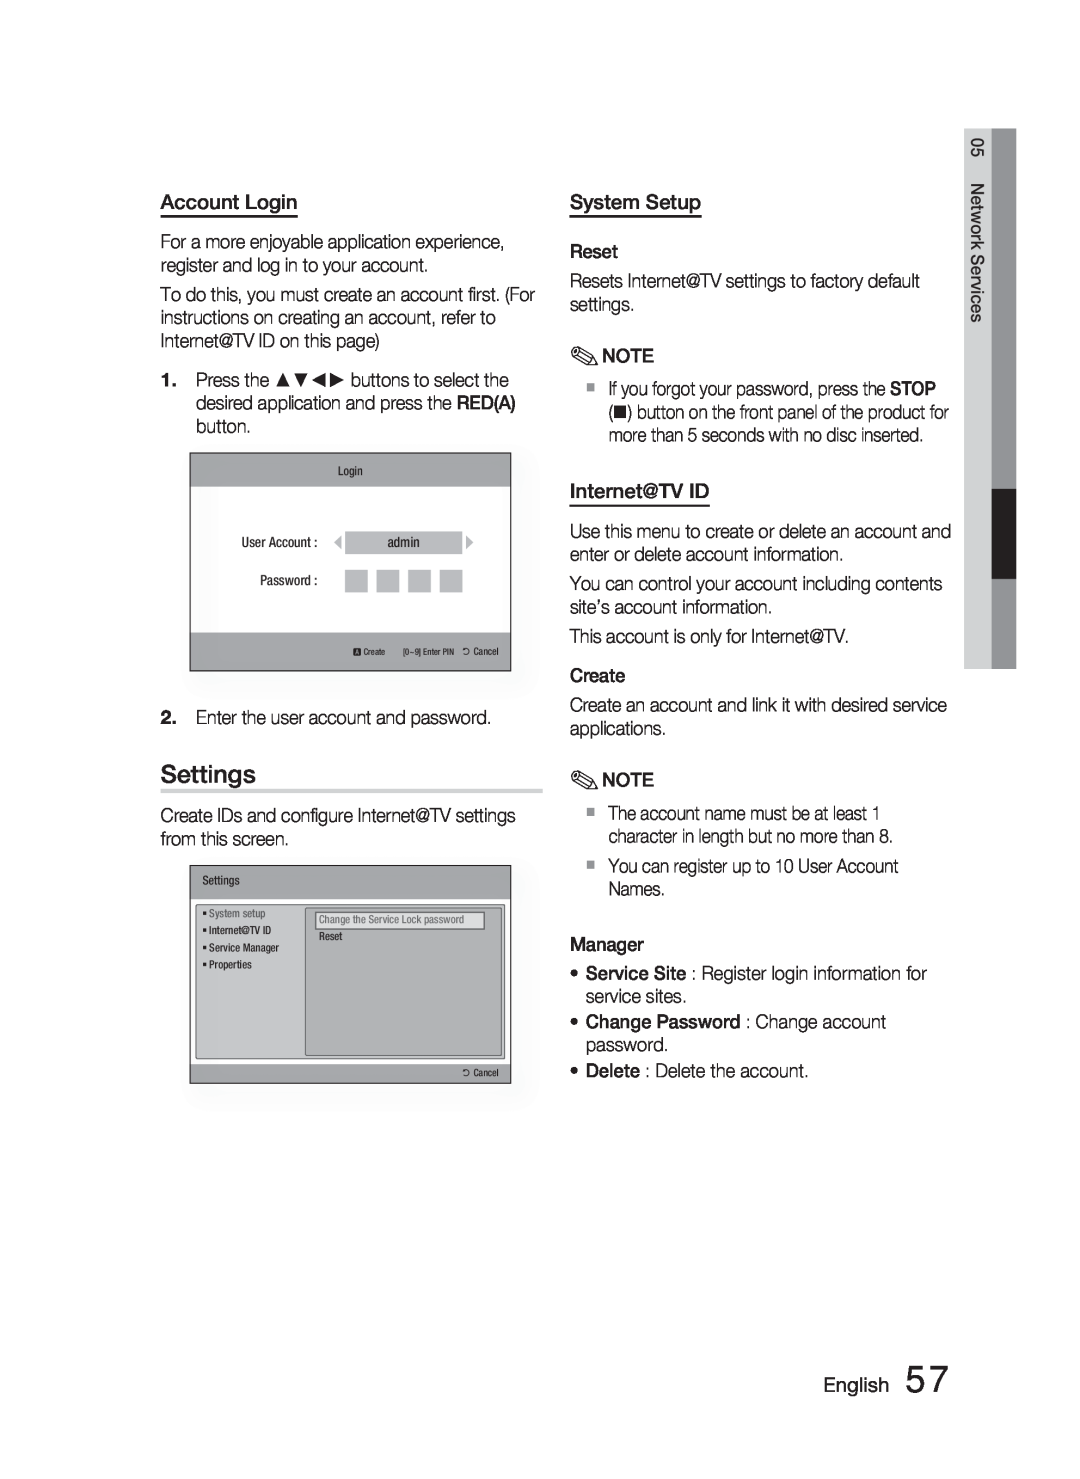 Samsung HT-C5500 user manual Settings, Account Login, System Setup, Internet@TV ID, English 